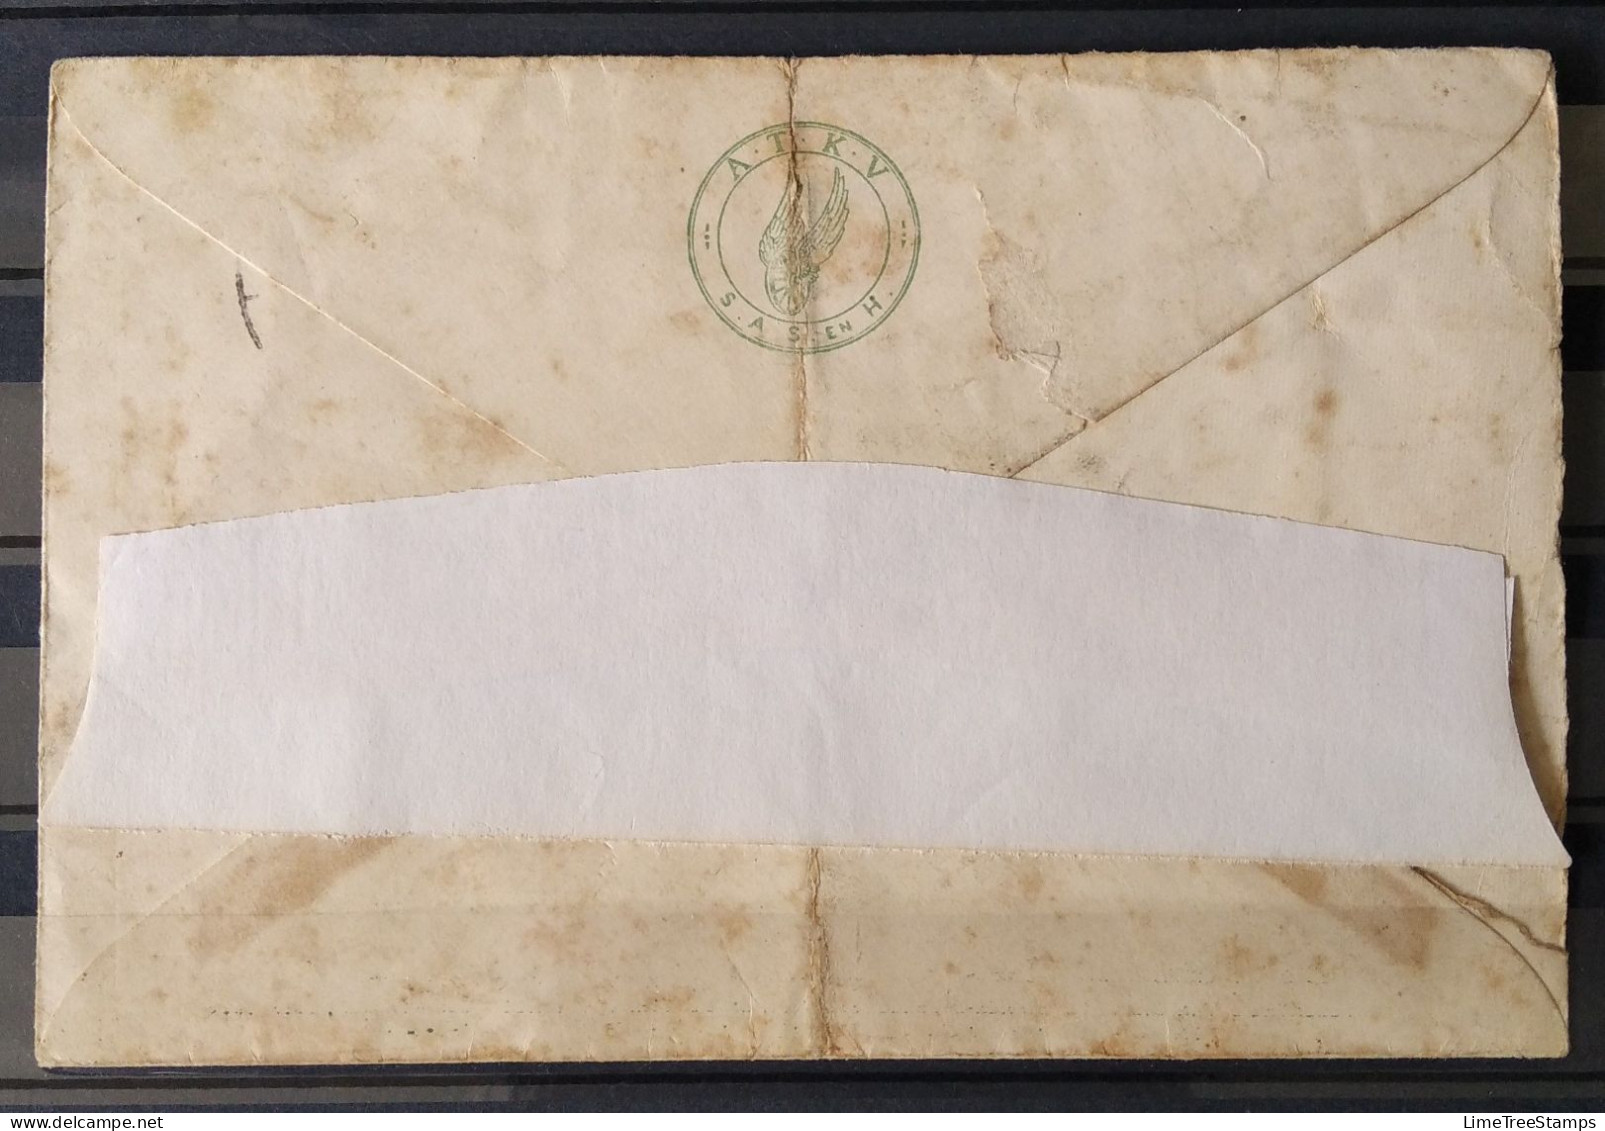 SOUTH AFRICA 1938 Voortrekker Memorial Fund - Centenary Envelope - Bloedrivier Cancel - Covers & Documents